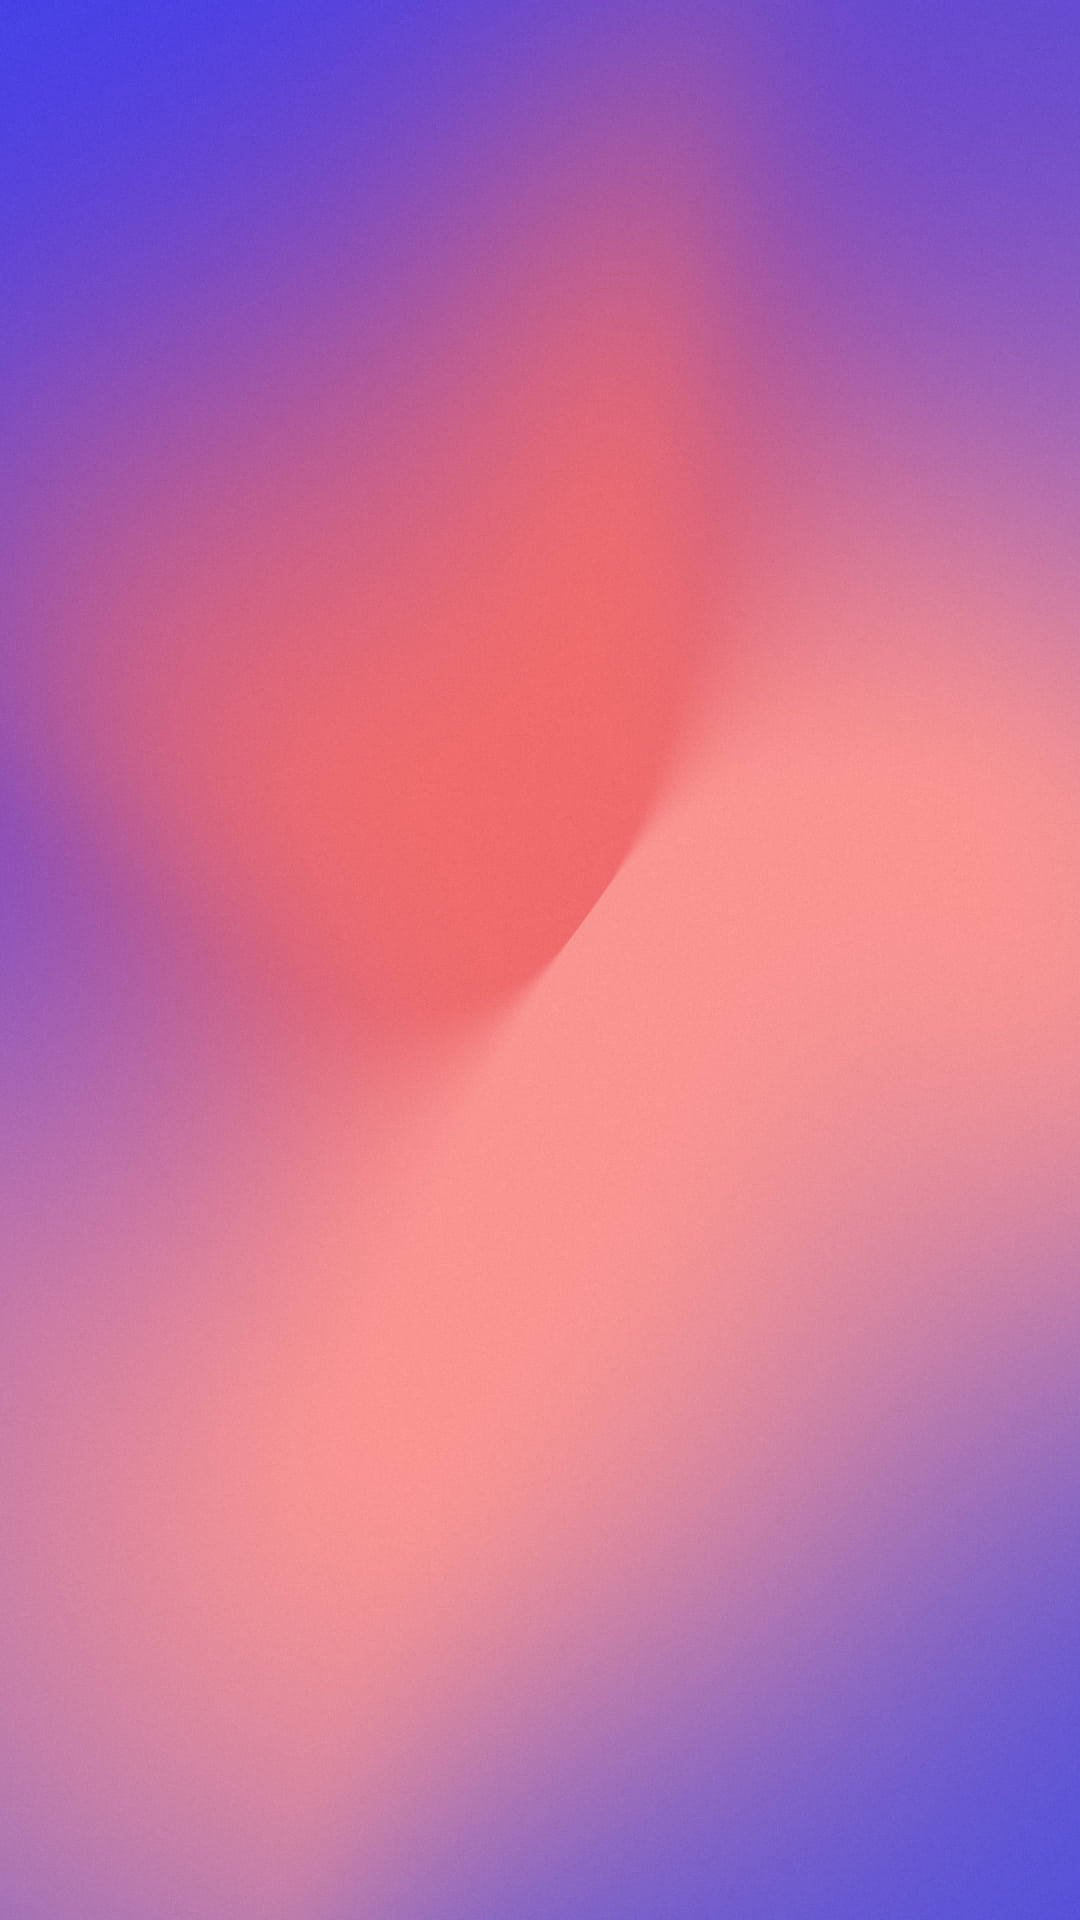 Pixel 3 Xl Gradient Pink And Purple Background